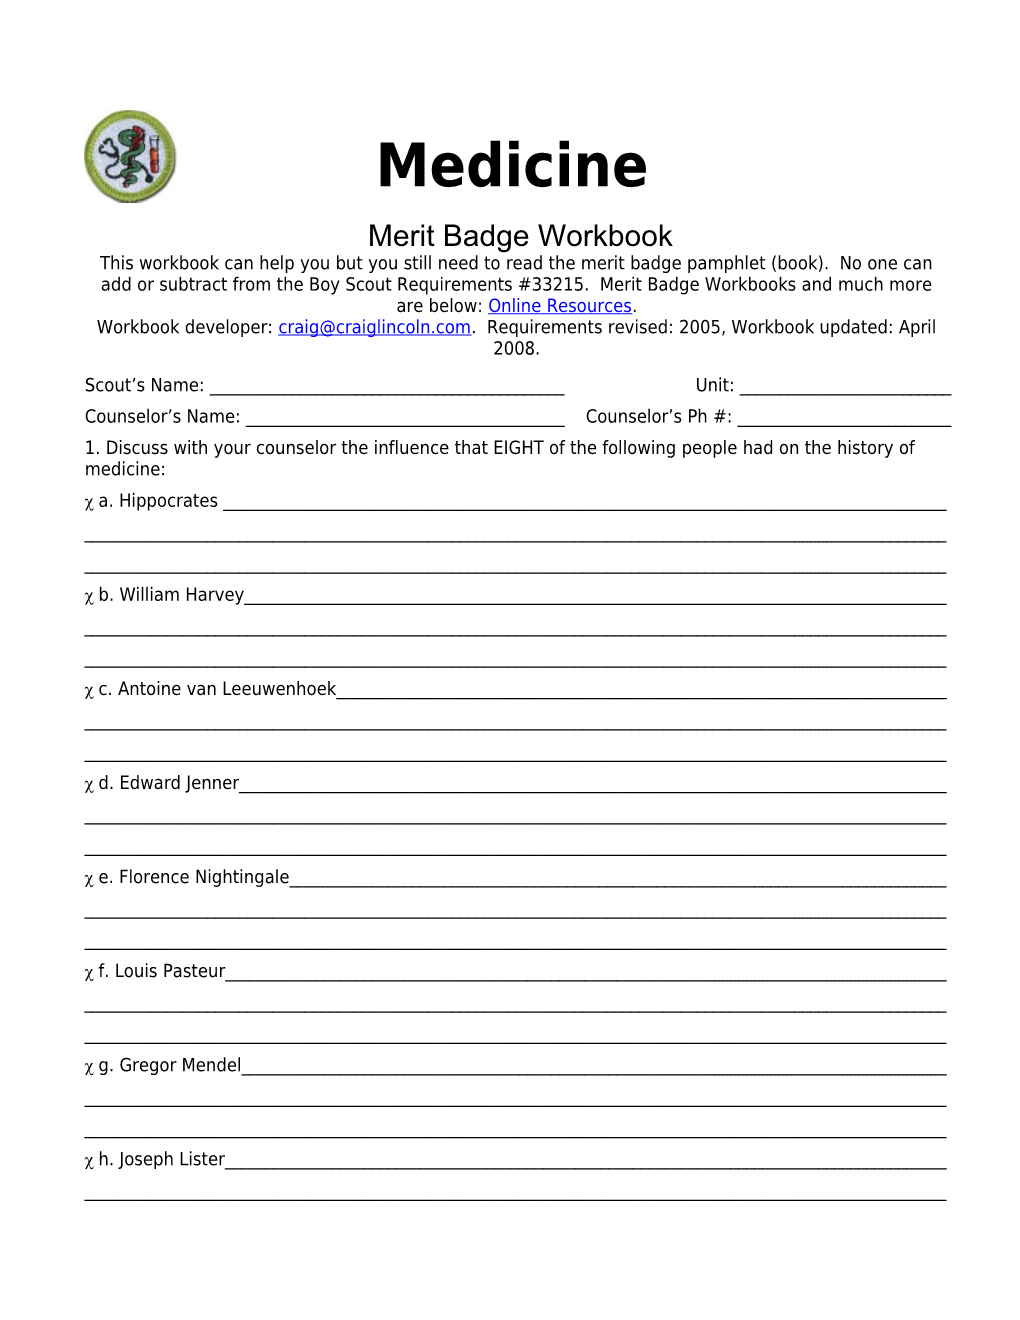 Medicine P. 7 Merit Badge Workbook Scout's Name: ______